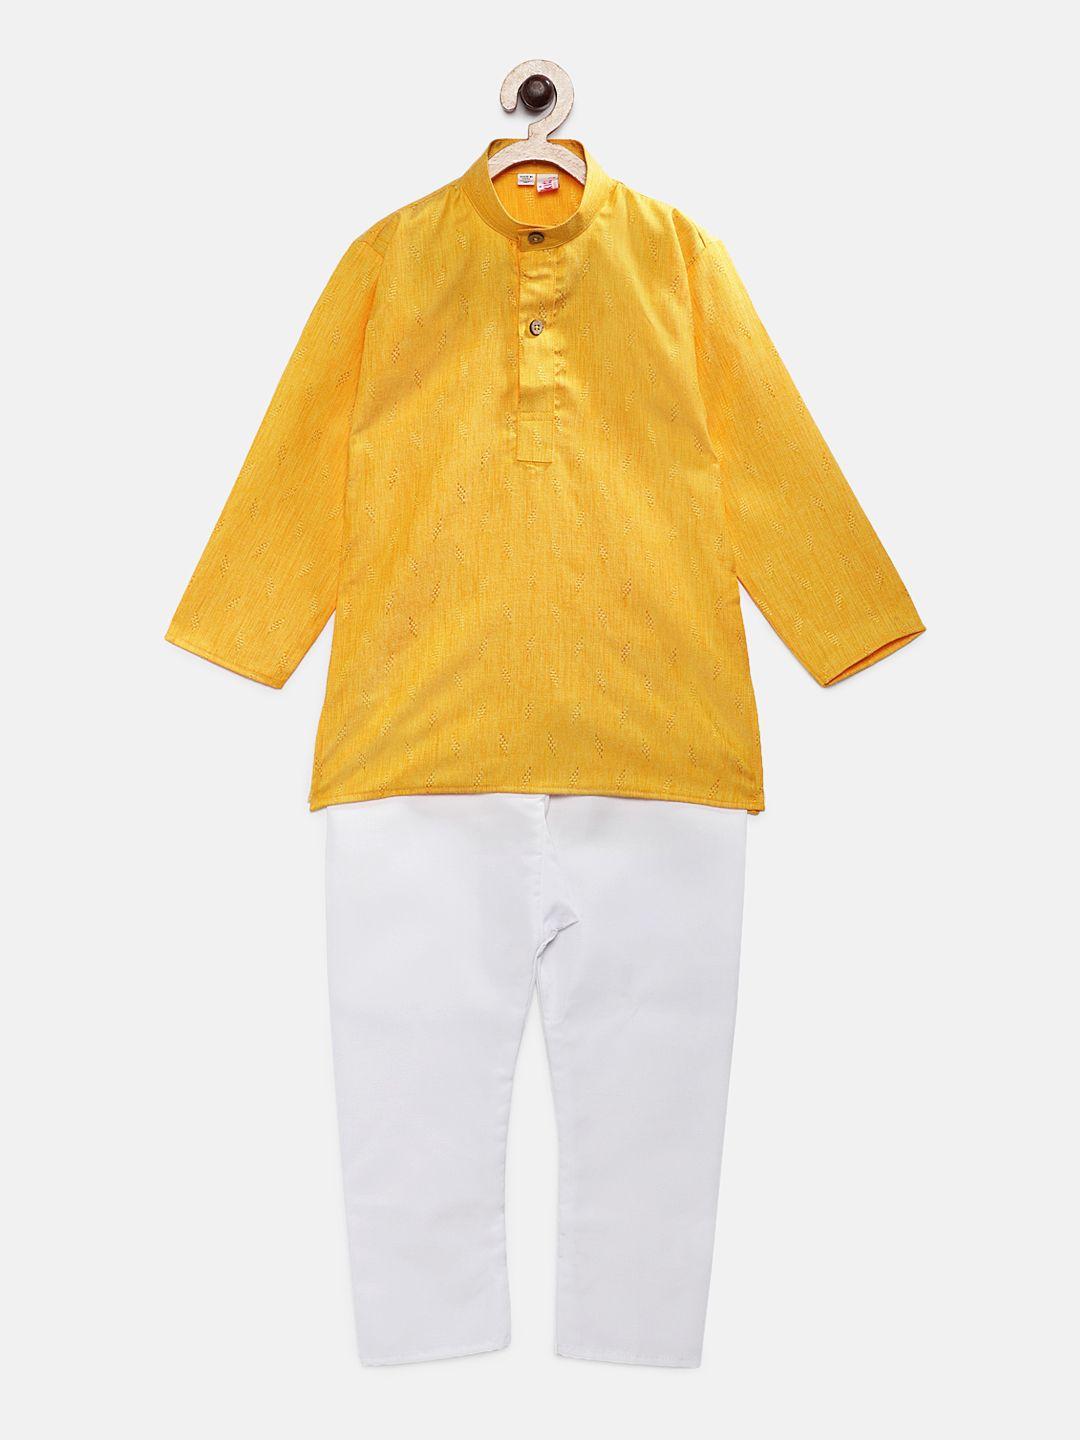 ridokidz boys yellow & white woven design kurta with pyjamas